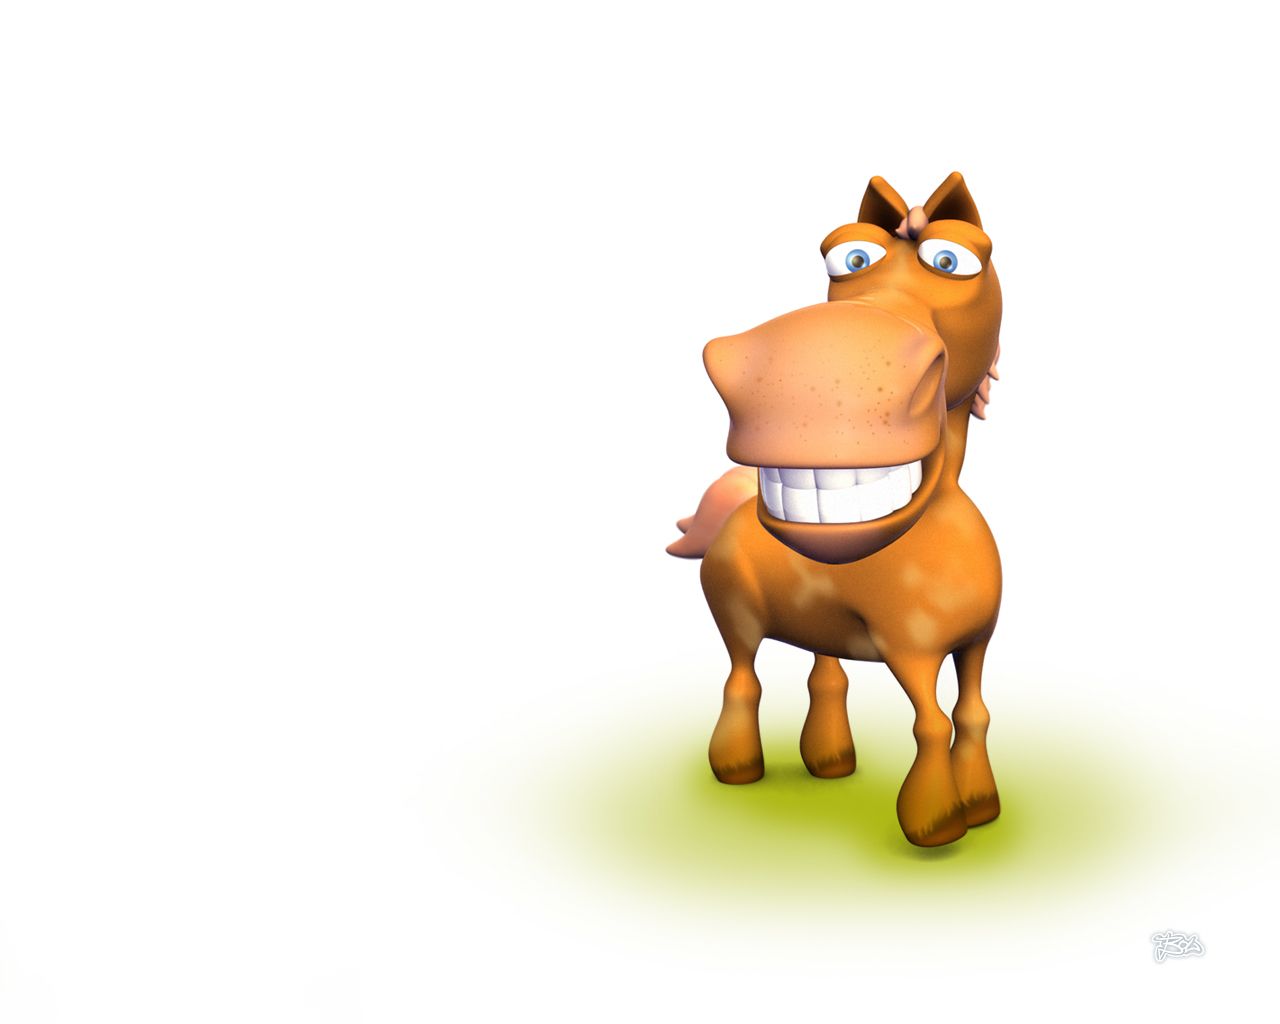 Download wallpaper: desktop wallpaper, horse, horse, photo